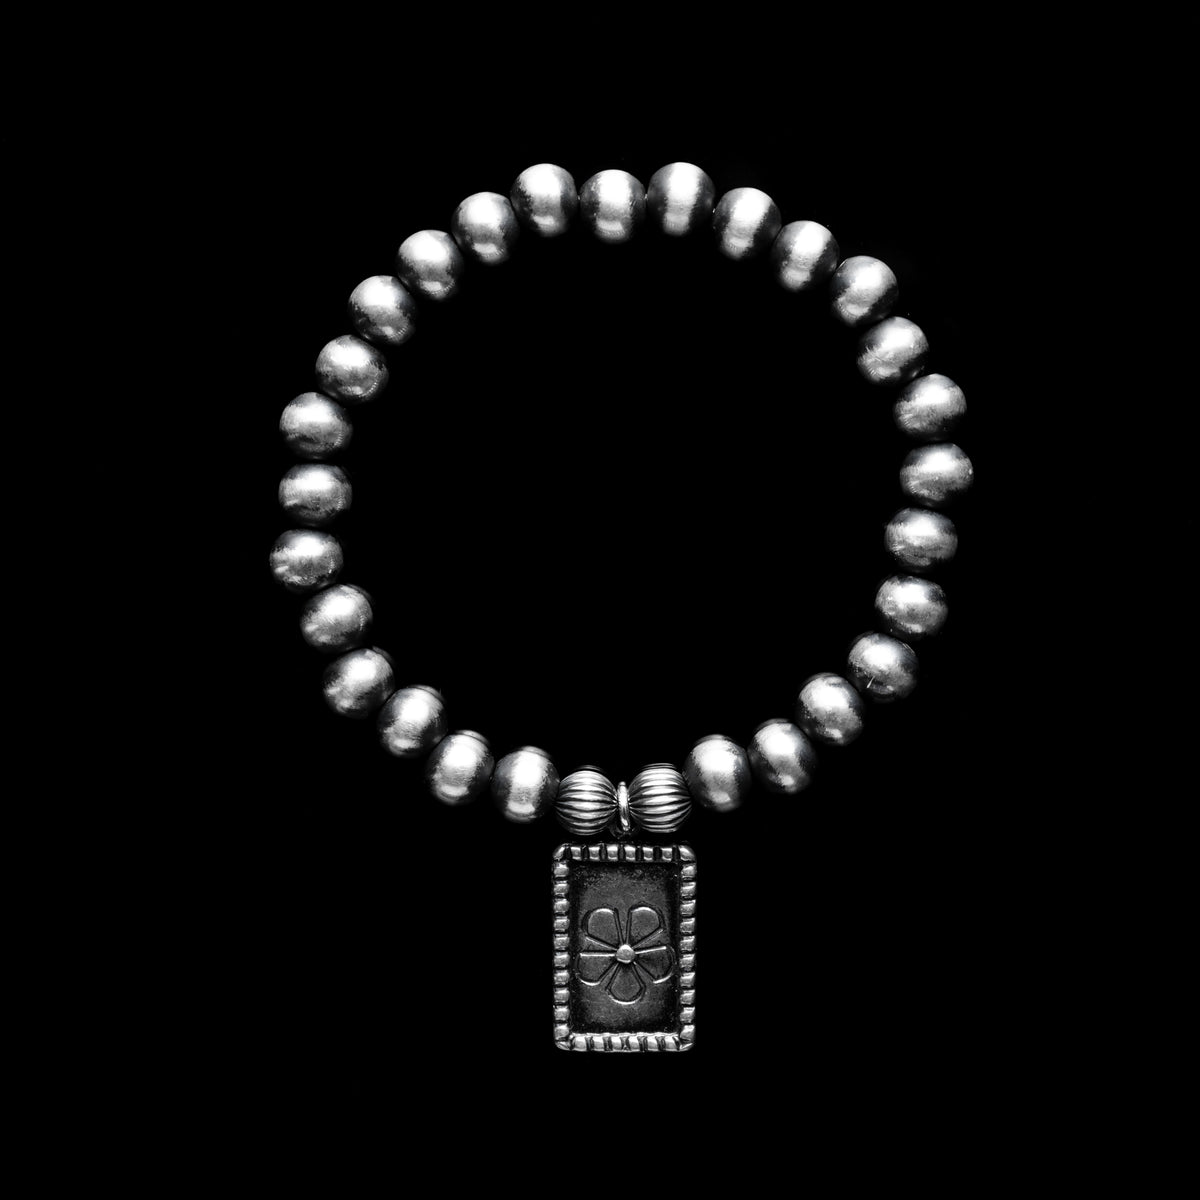 Santa Fe Pearl Stretch Bracelet with Flower Charm - 7mm